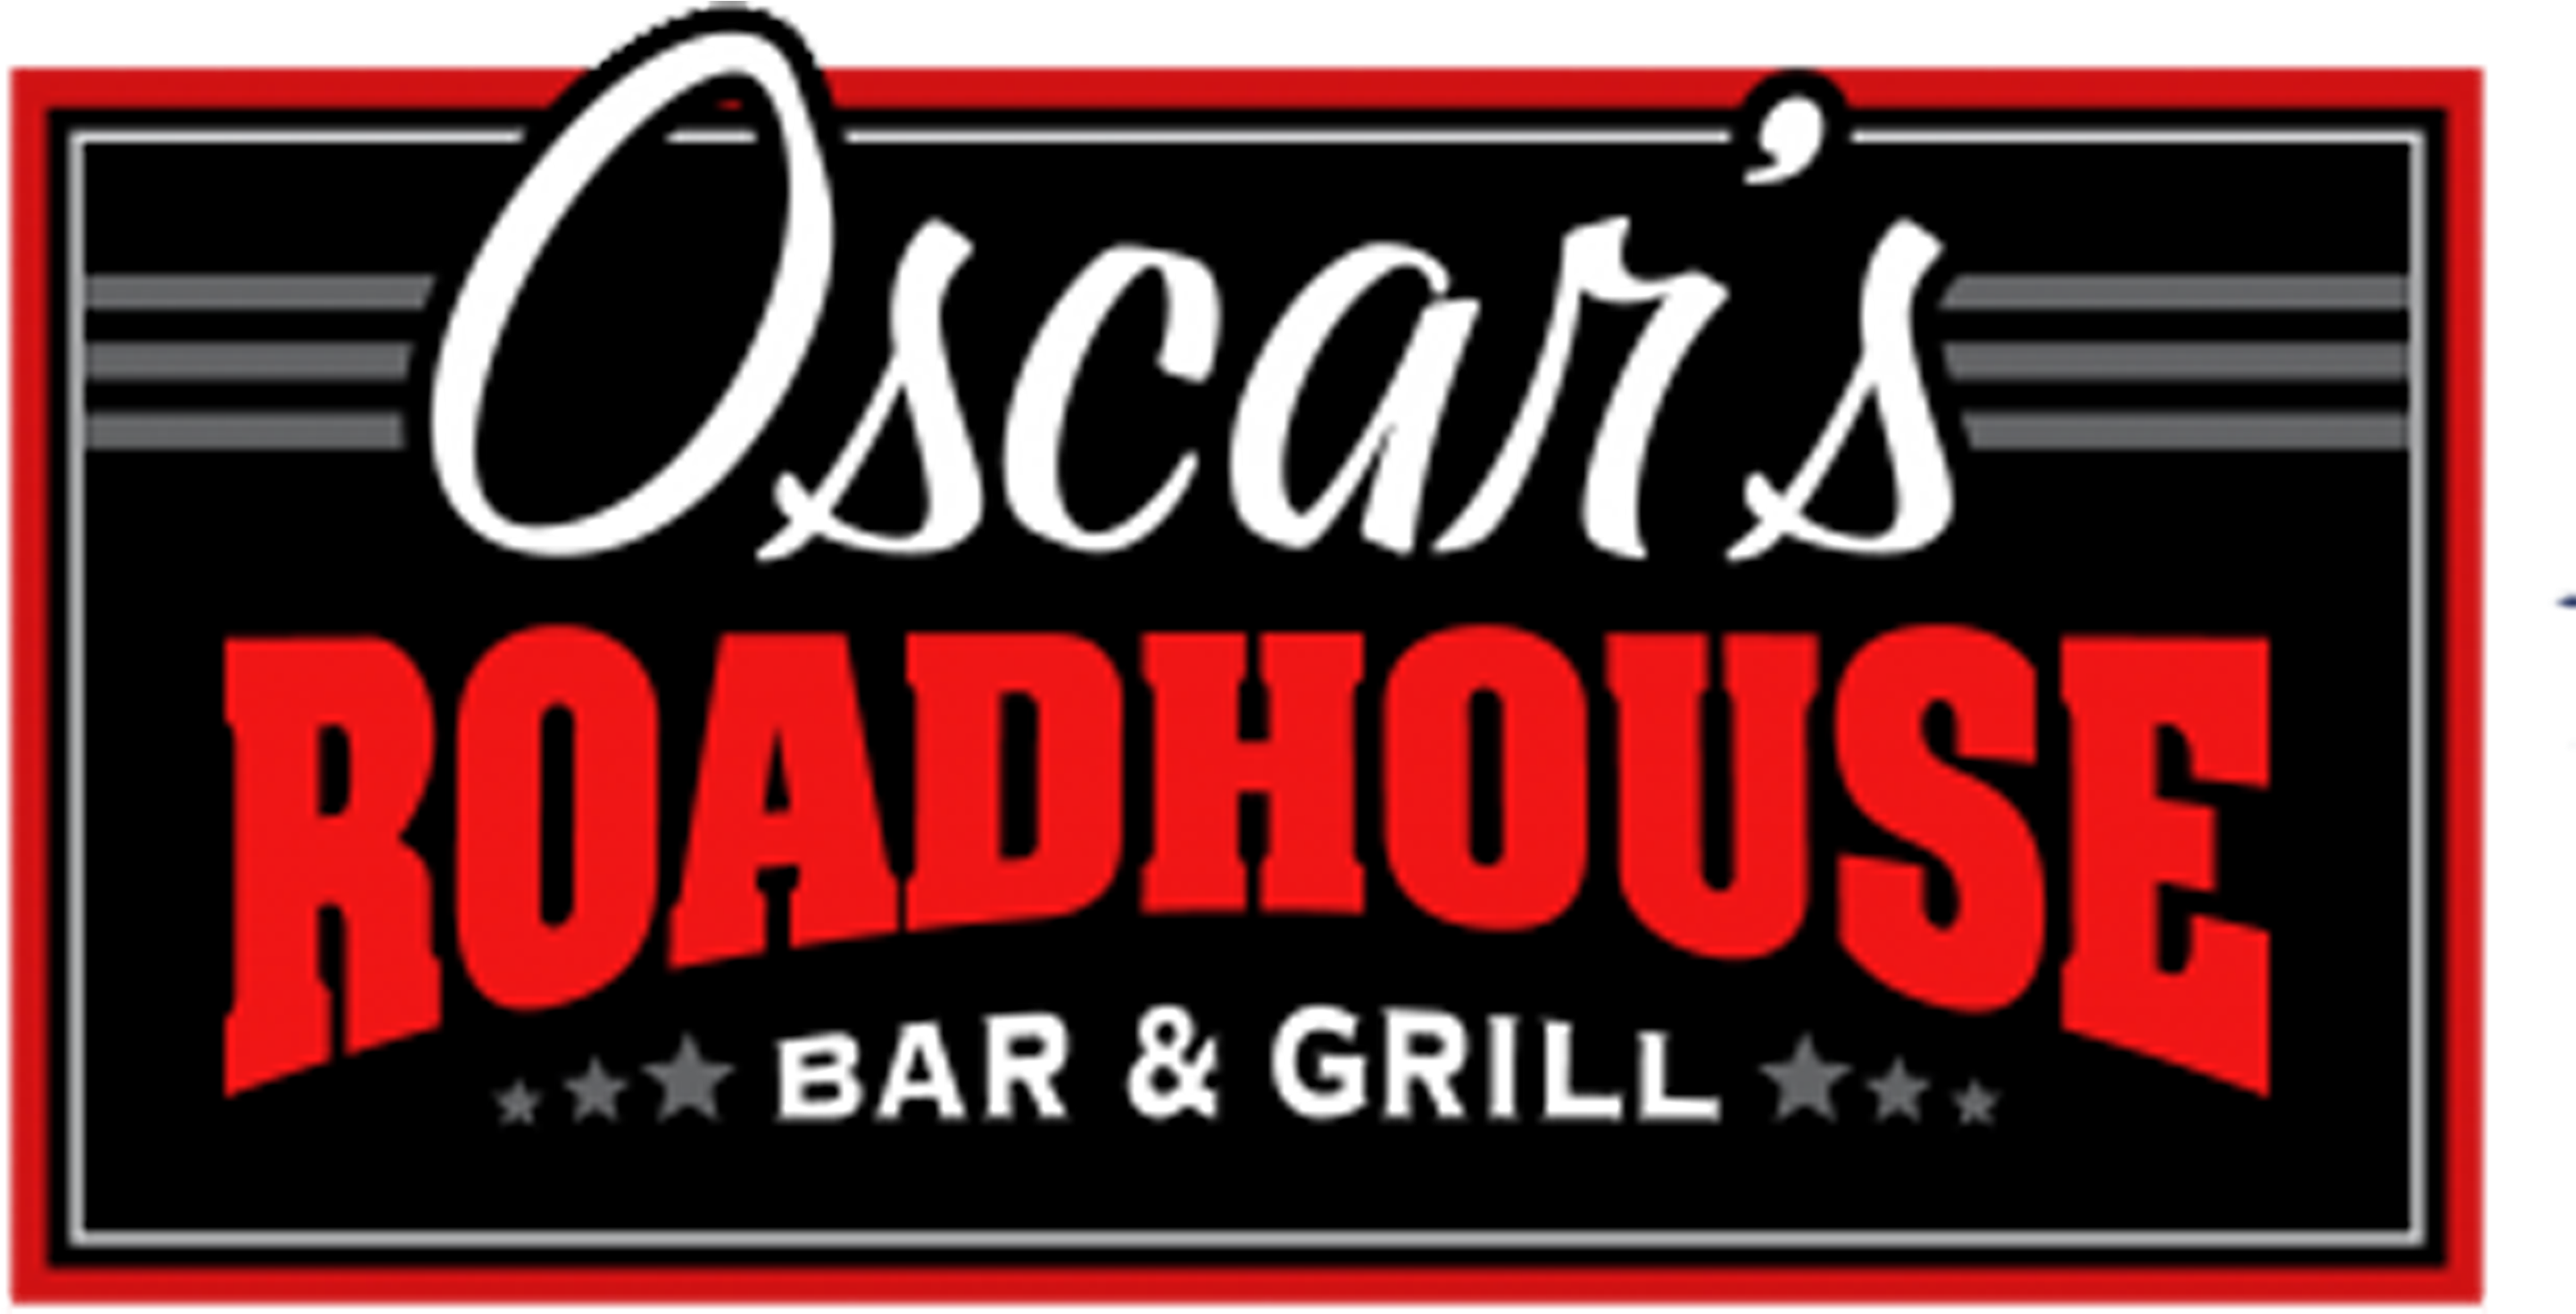 Oscars Roadhouse (3333x1974)